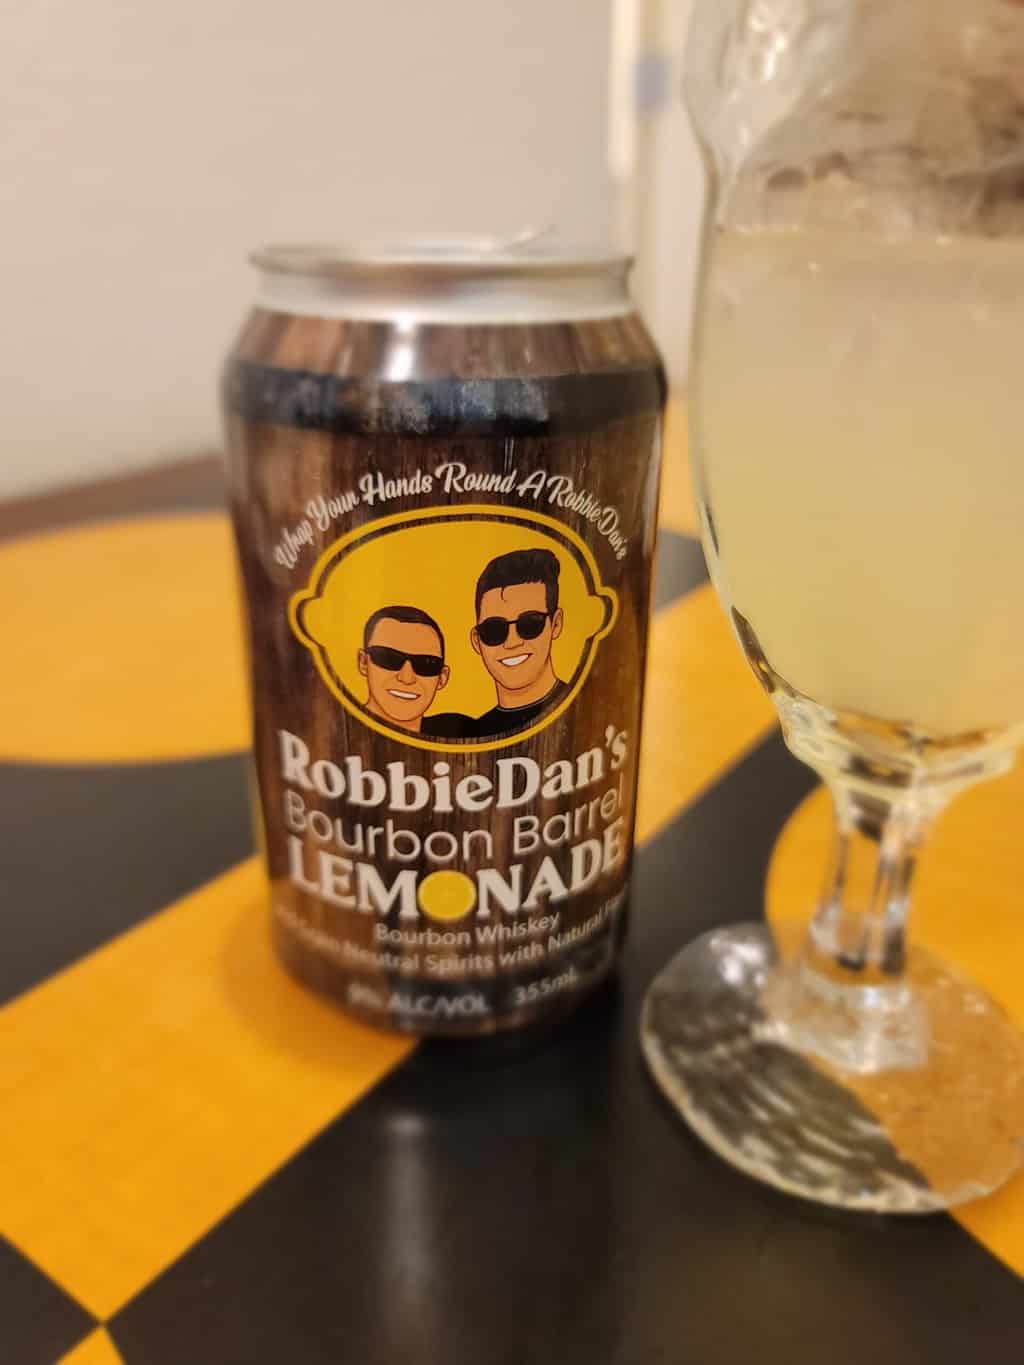 RobbieDan's Bourbon Barrel Lemonade Can and glass.